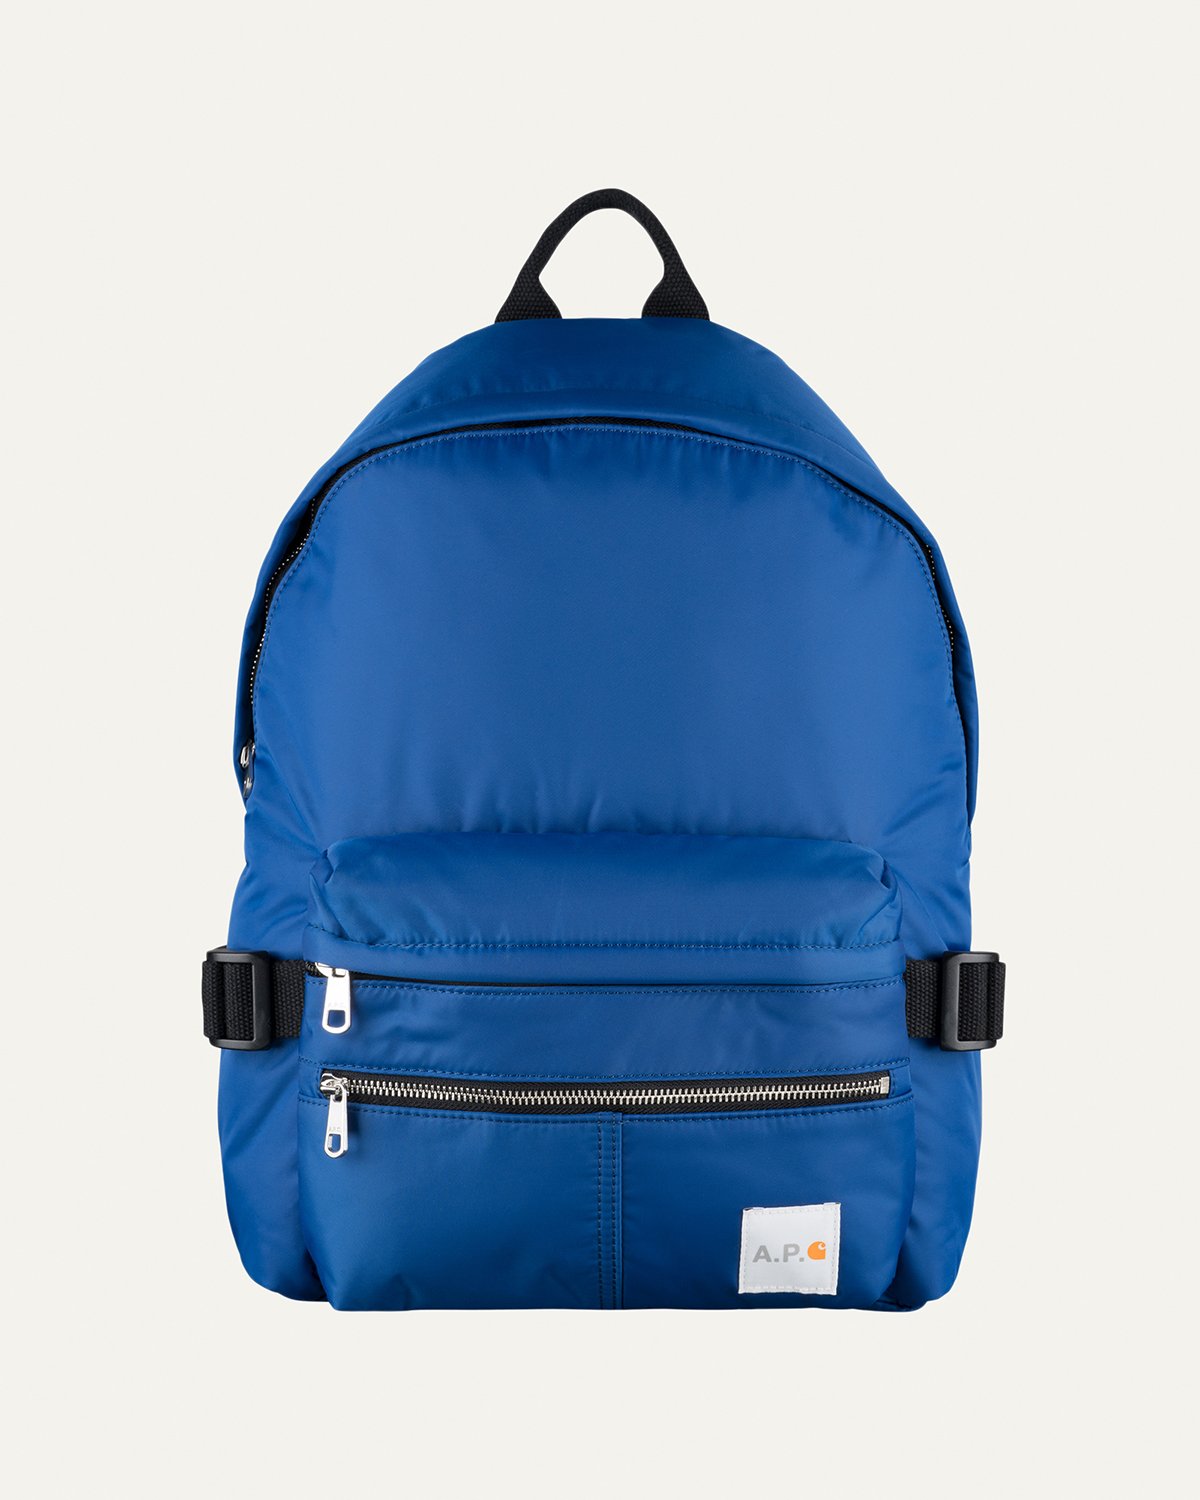 A.P.C. x Carhartt WIP - Shawn Backpack Indigo - Accessories - Blue - Image 1